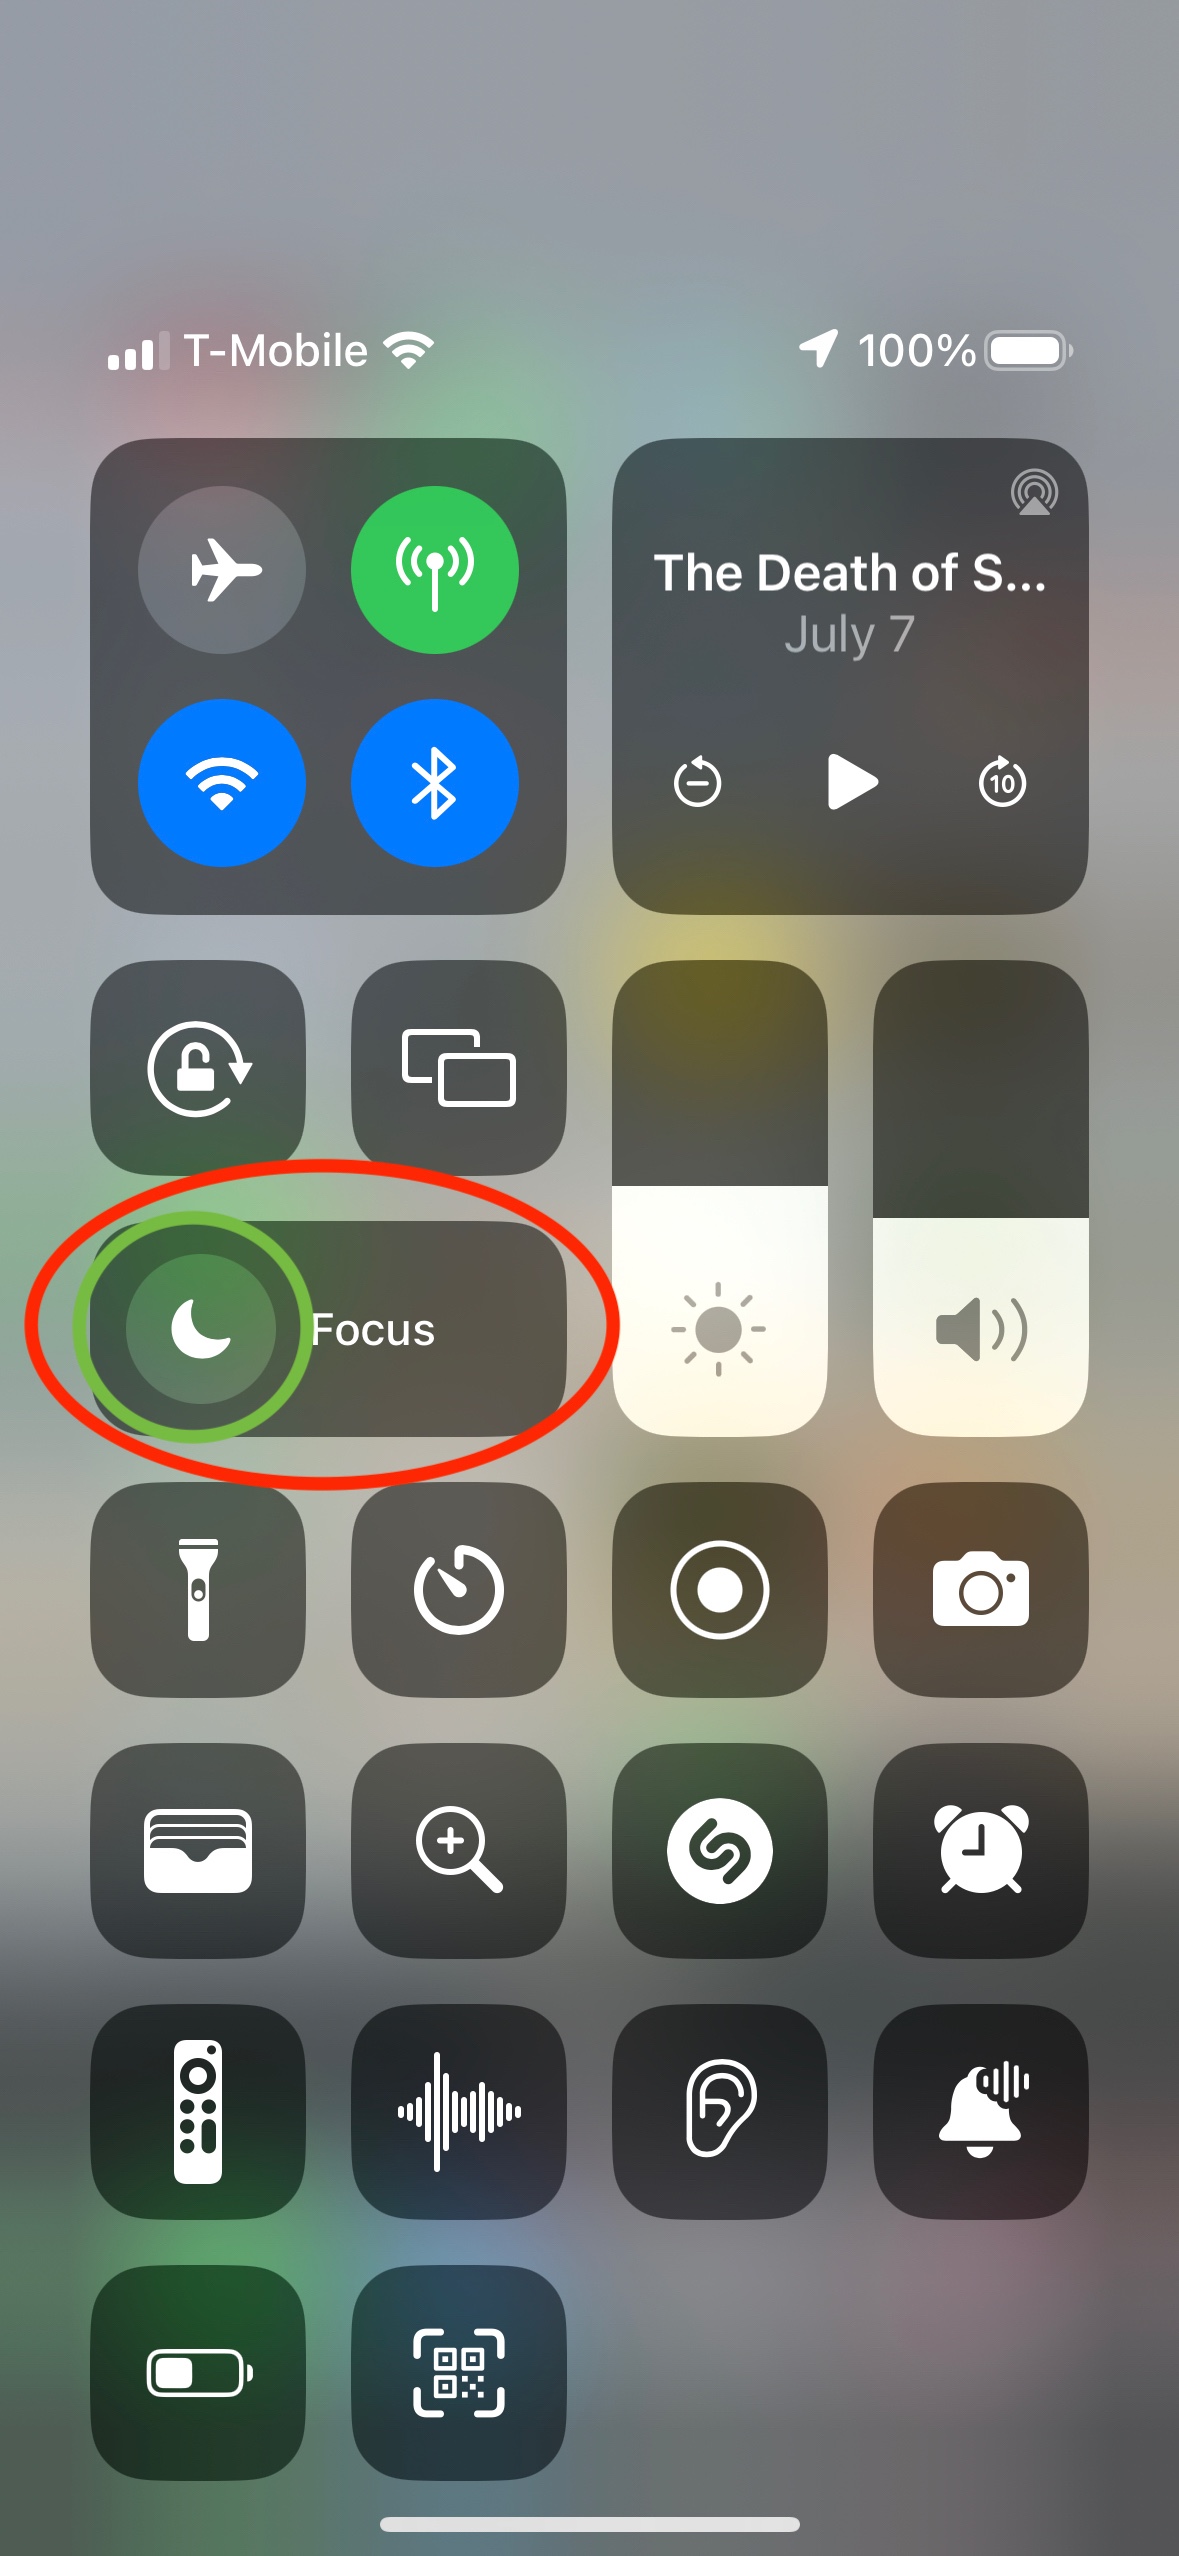 Turn off Do Not Disturb - Apple Support